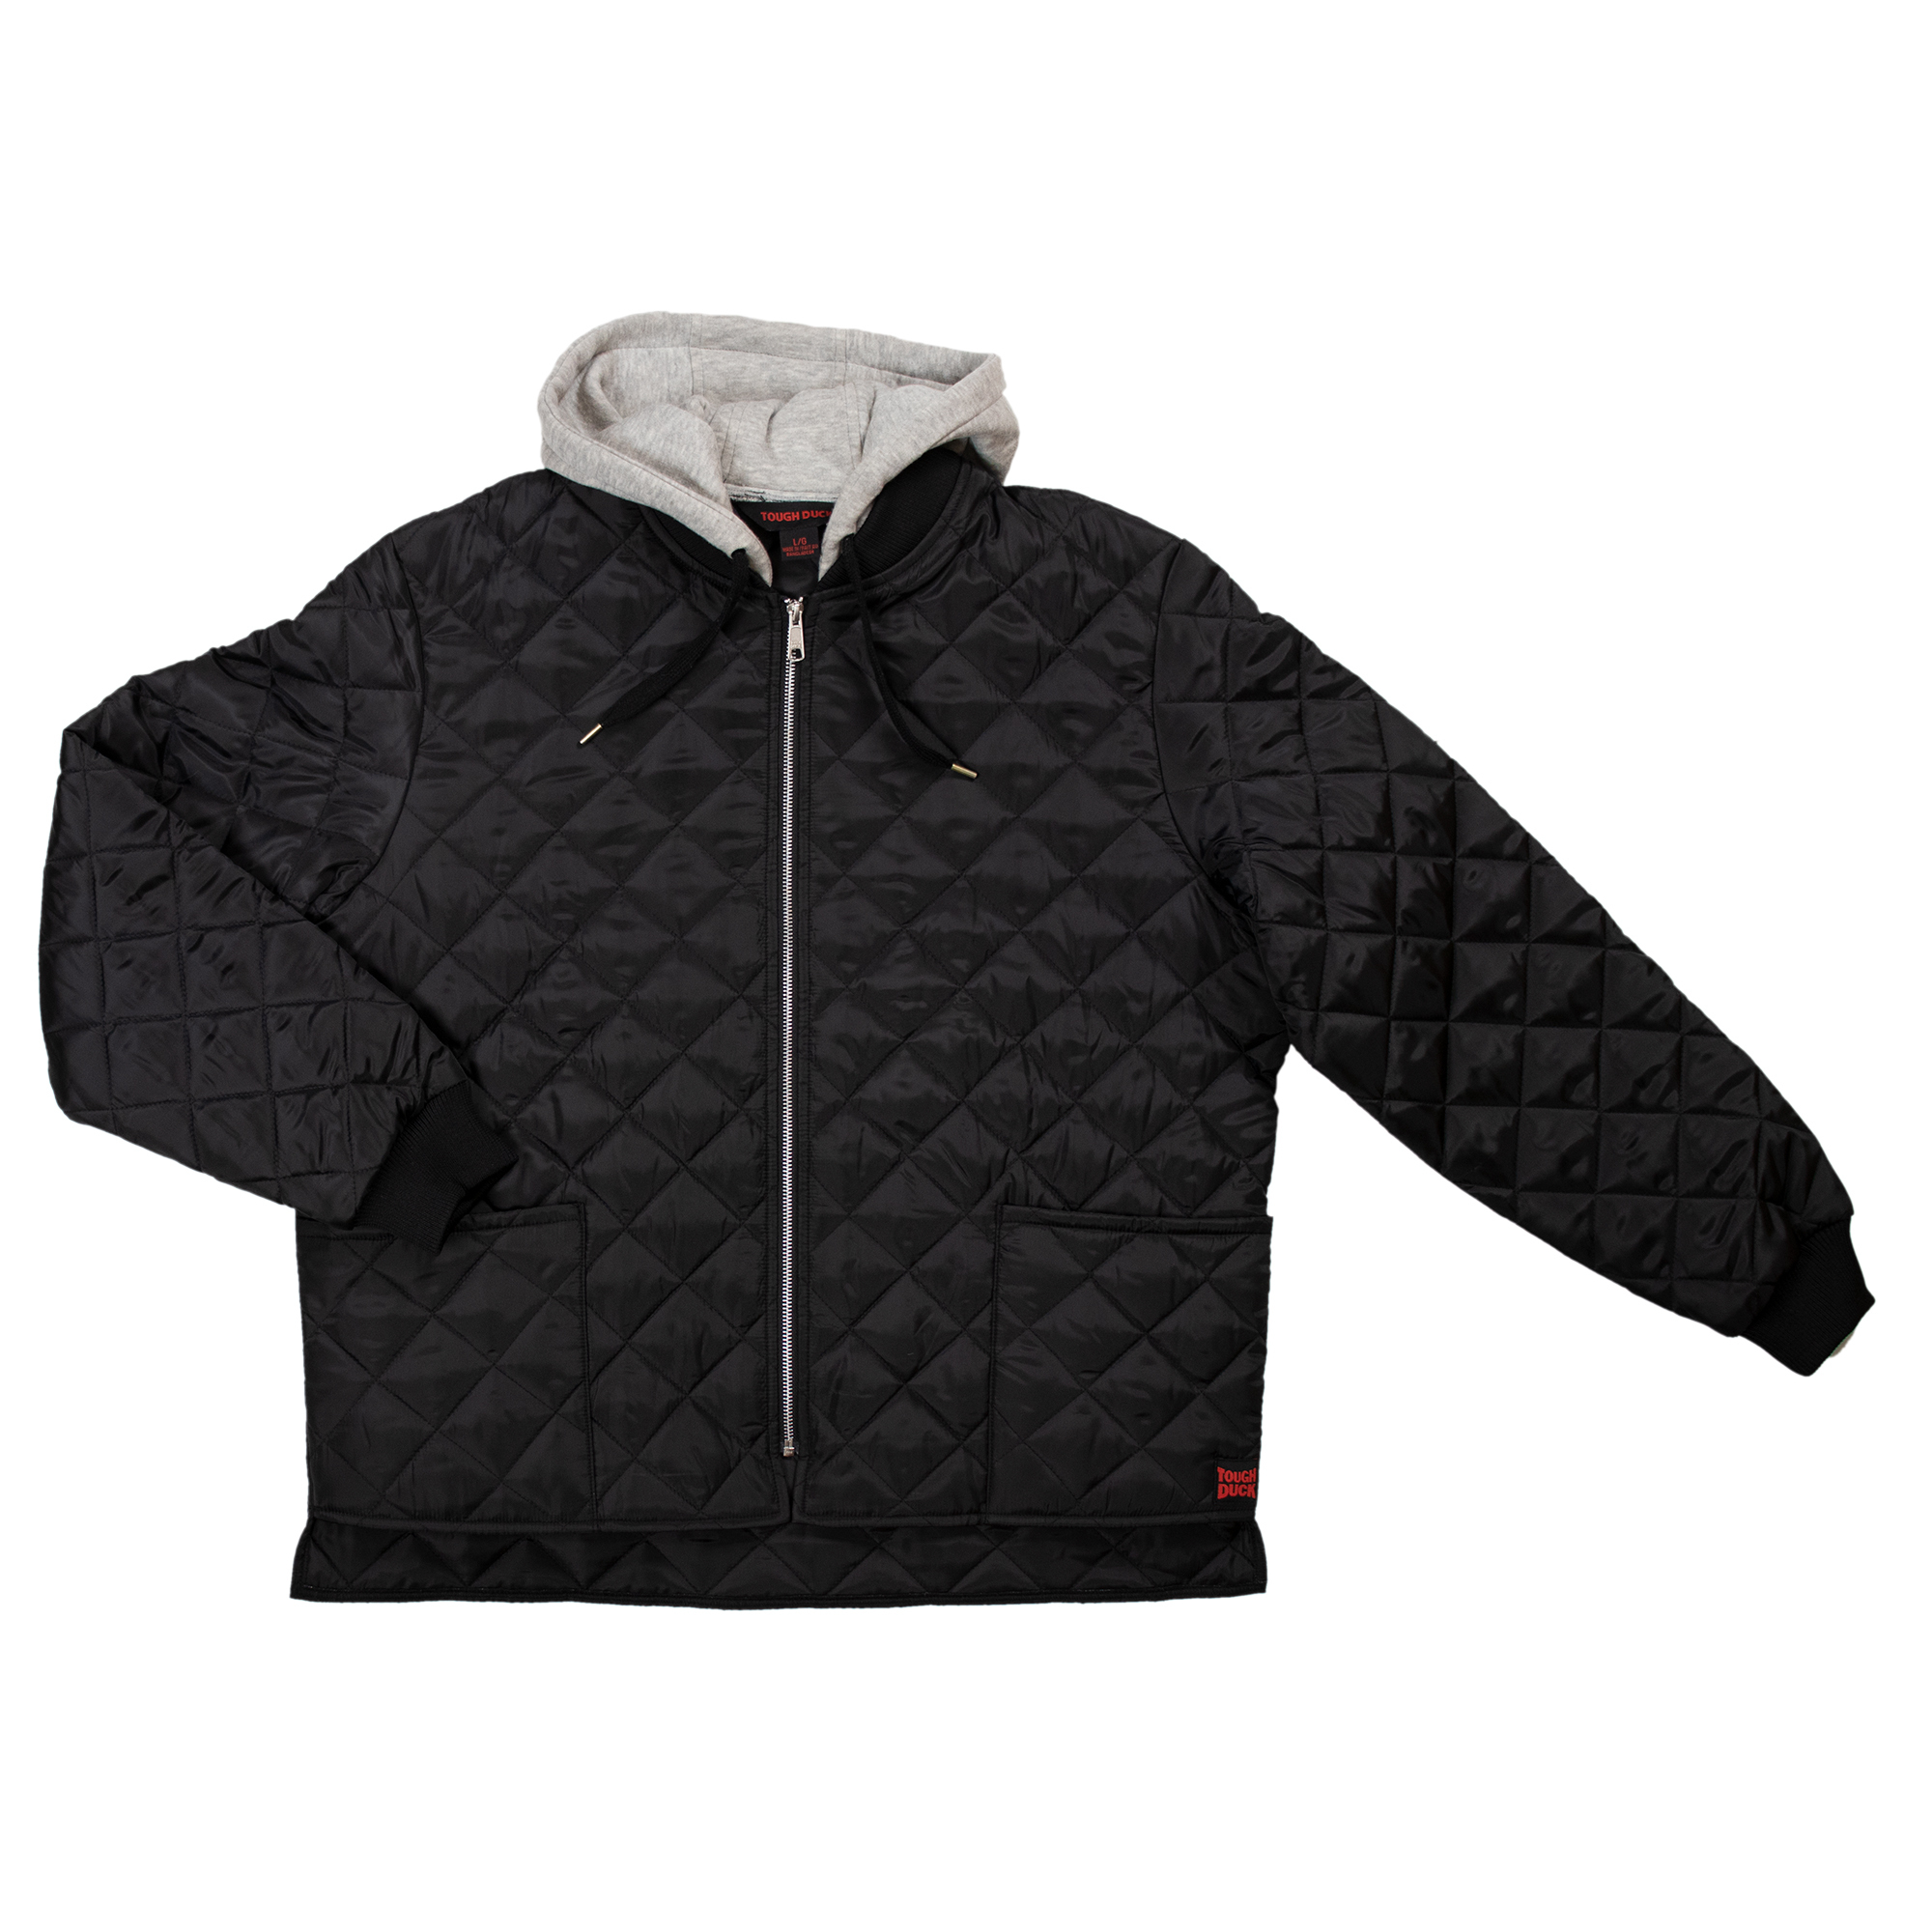 Tough Duck, Hooded Freezer Jacket, Size M, Color BLACK, Model WJ261-BLACK-M